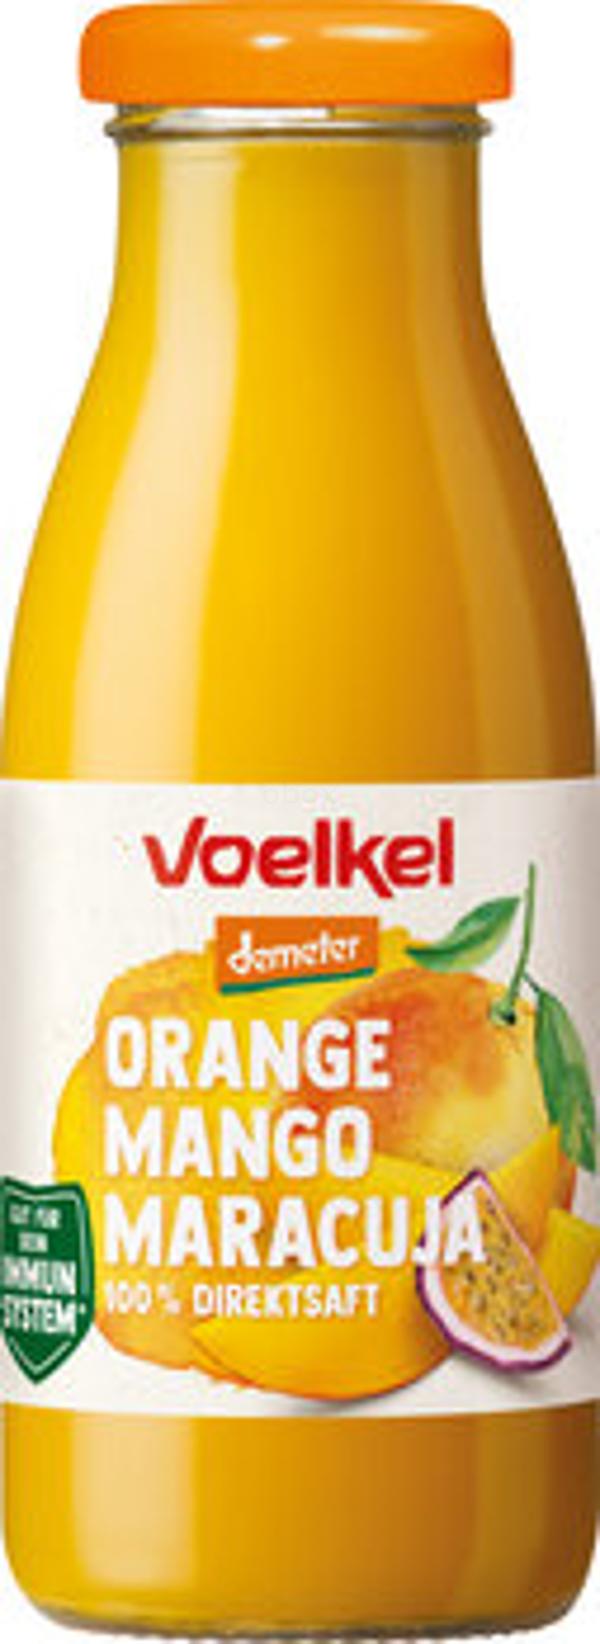 Produktfoto zu Orange-Mango-Maracuja, 6x0,25 l